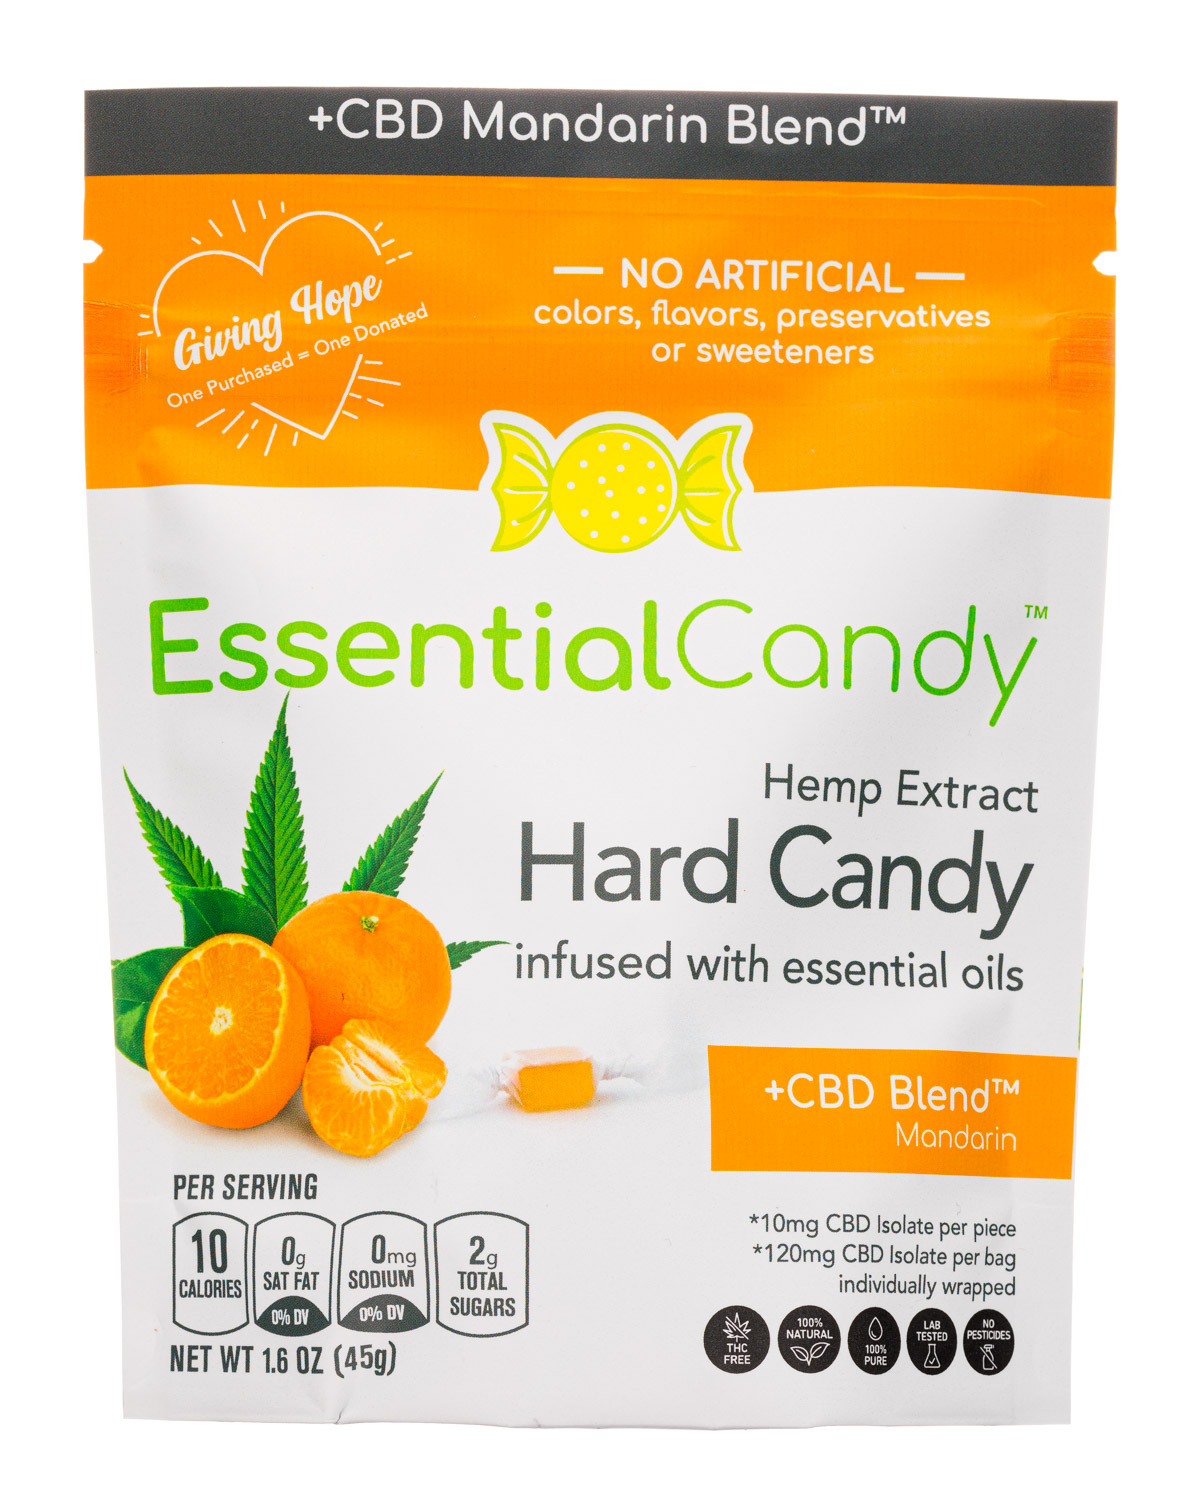 Hemp Extract Hard Candy with +CBD Blend Mandarin